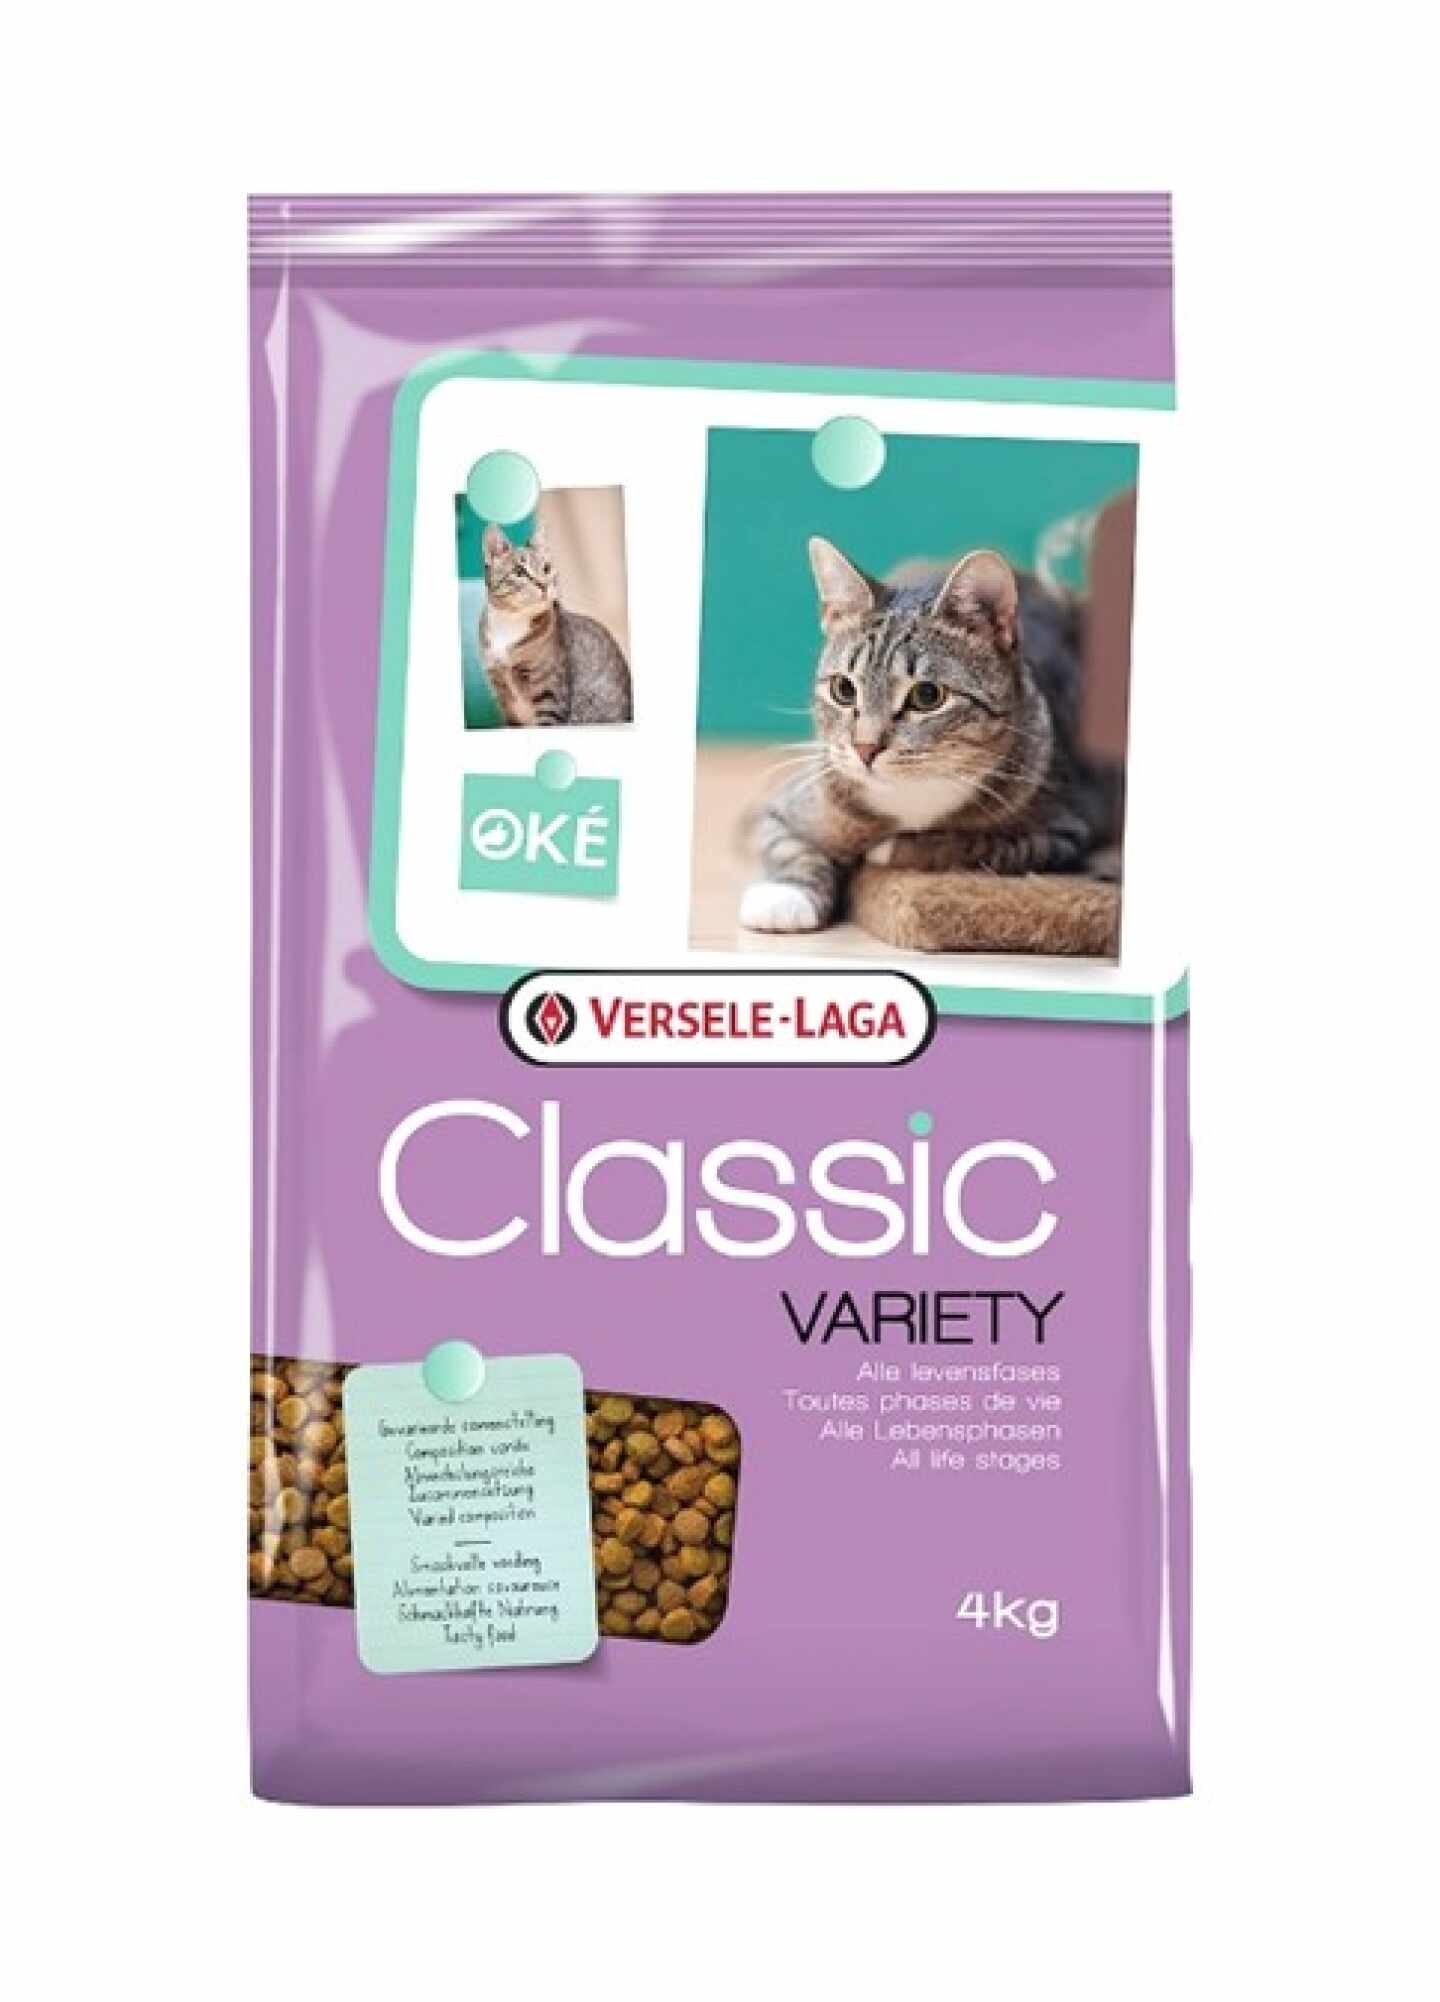 Versele-Laga Oke Classic Cat Variety, 4 kg